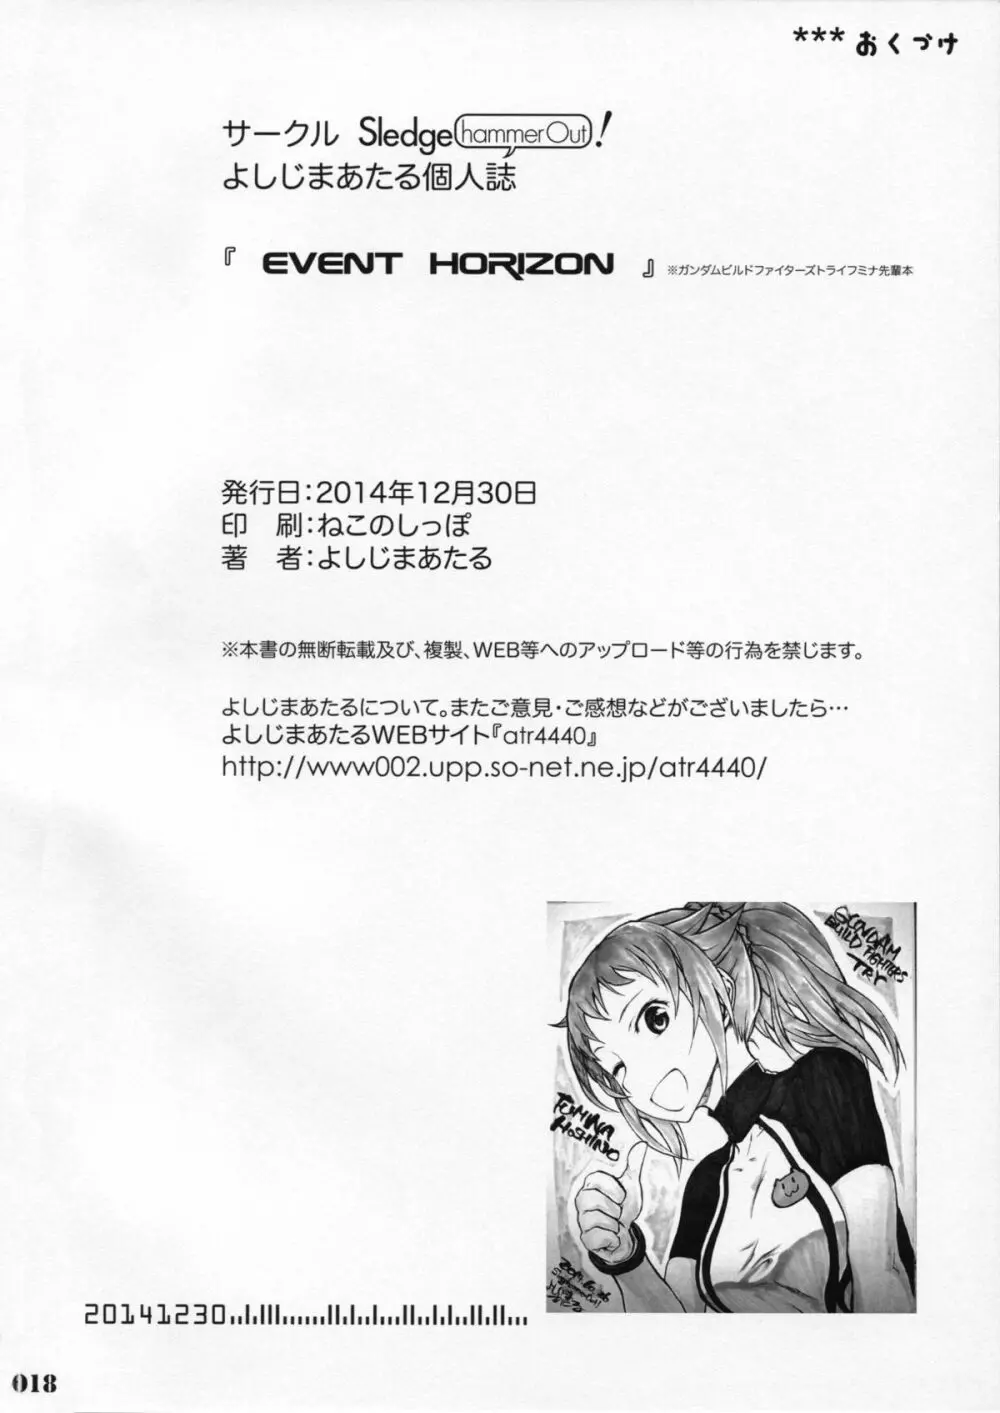 EVENT HORIZON - page17